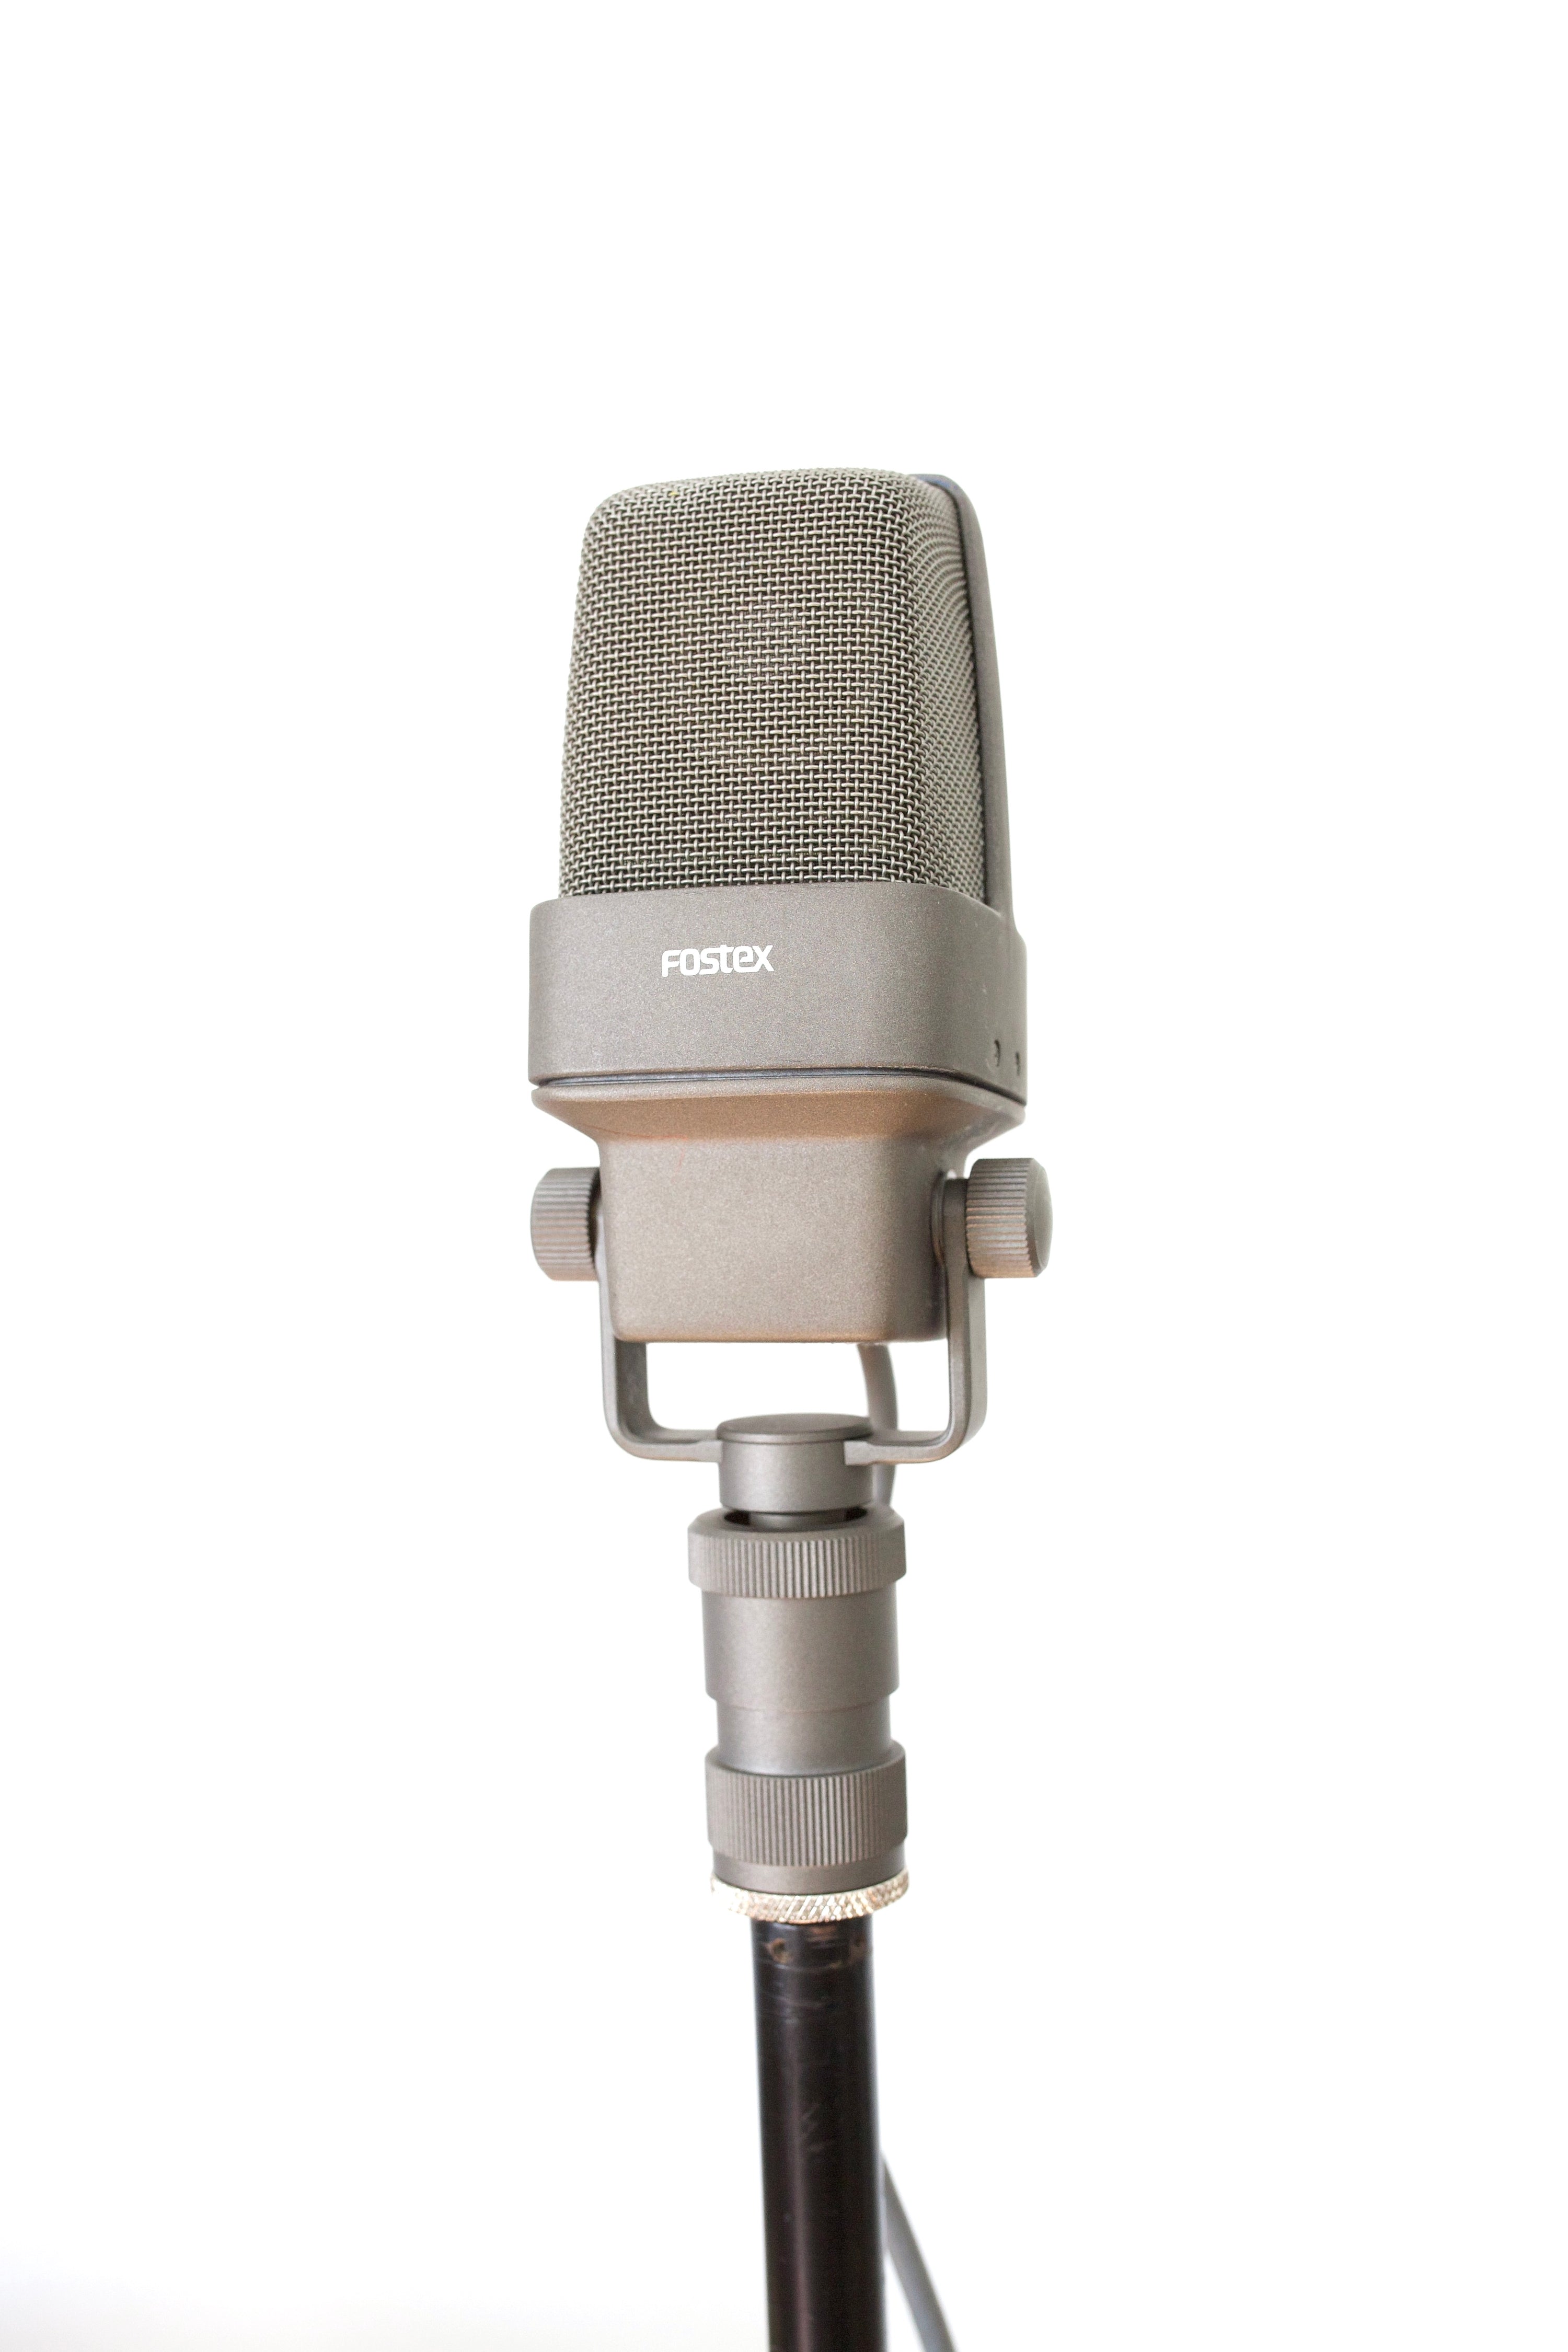 Fostex M11RP Printed Ribbon Microphone